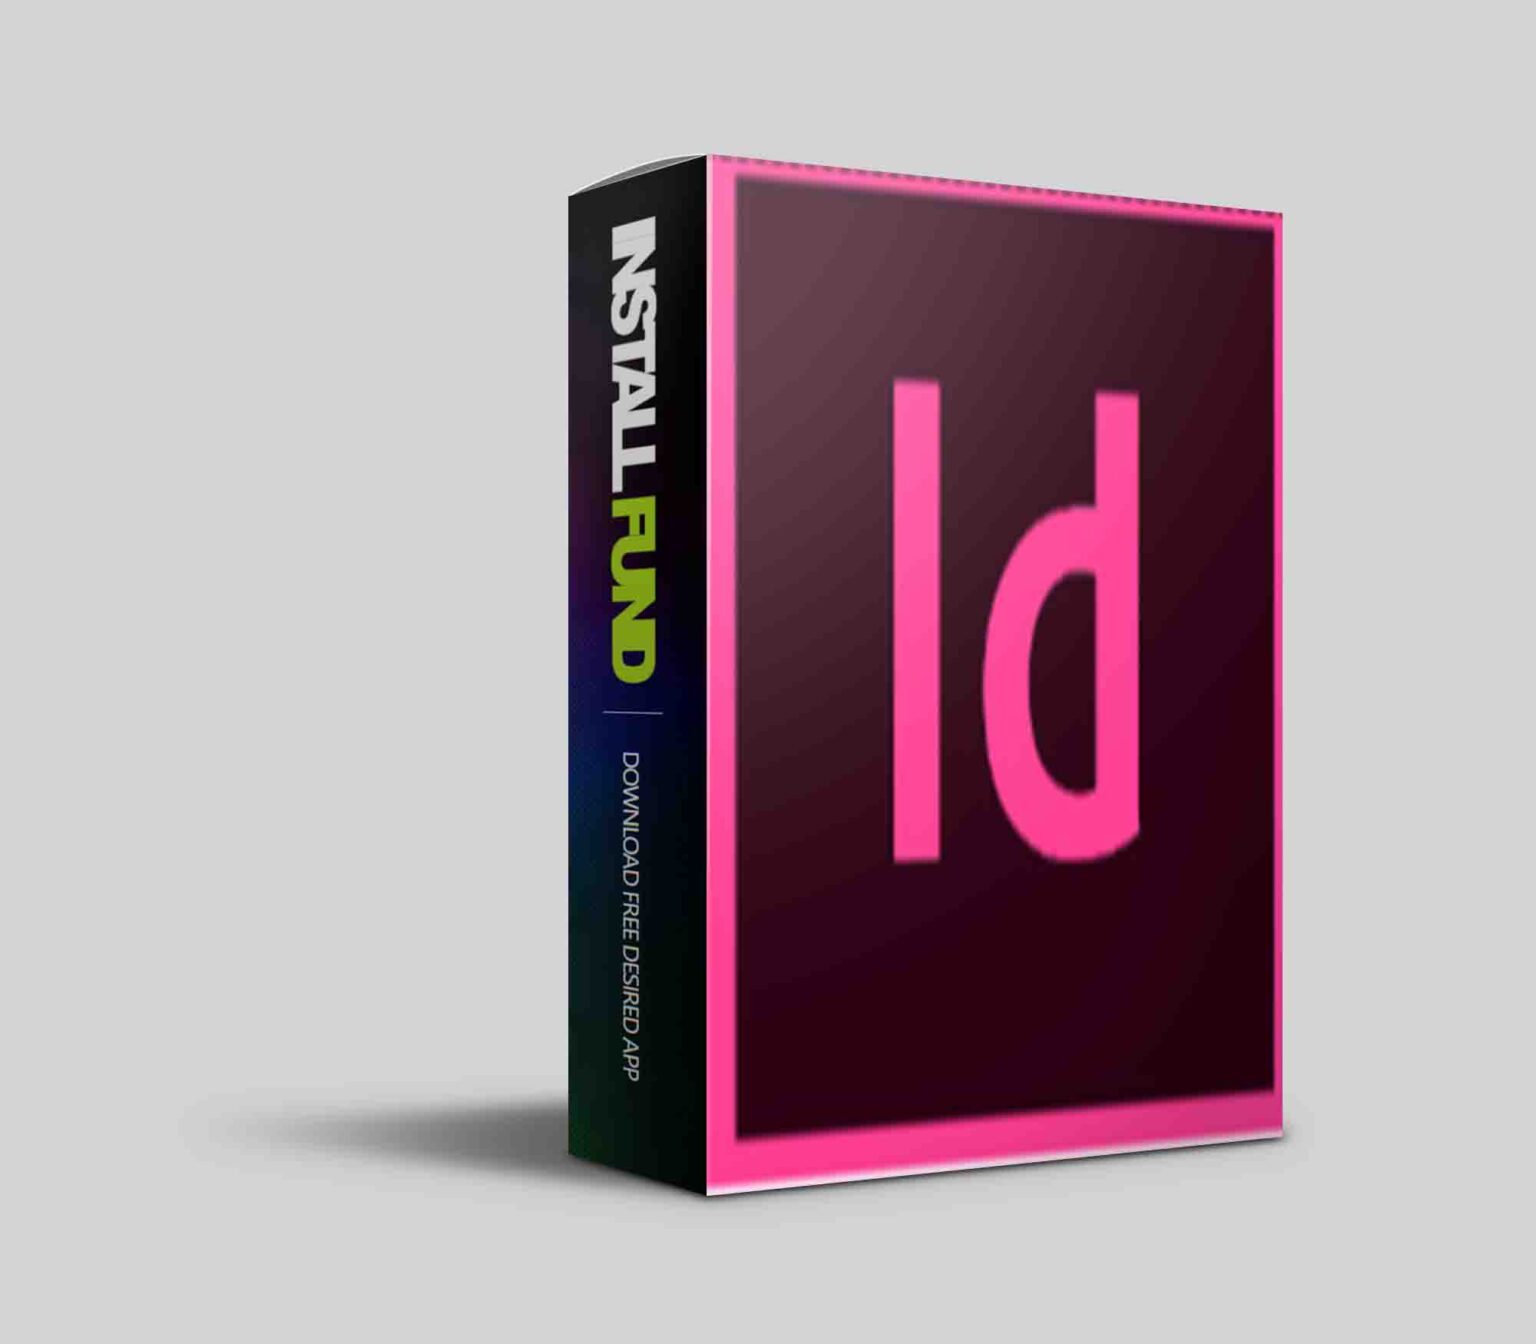 Adobe InDesign 2023 v18.5.0.57 download the new version for ipod